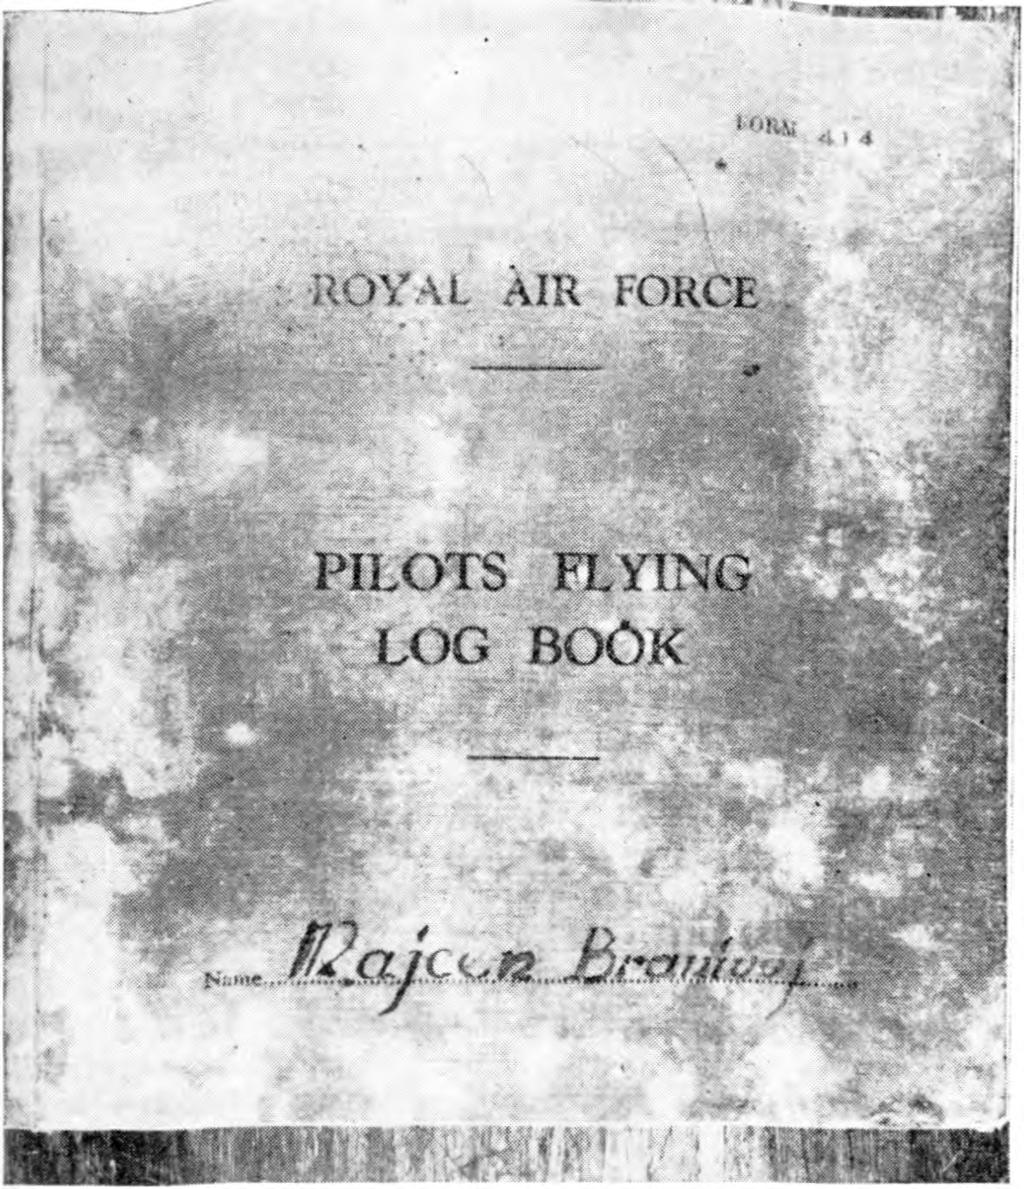 Fotokopija naslovne strani knjige letenja pilota Druge lovske eskadrilje Branivoja Majcna Ta operacija je opisana v operacijskem dnevniku takole: Operacija 128 134 z dne 25. 4. 1945.